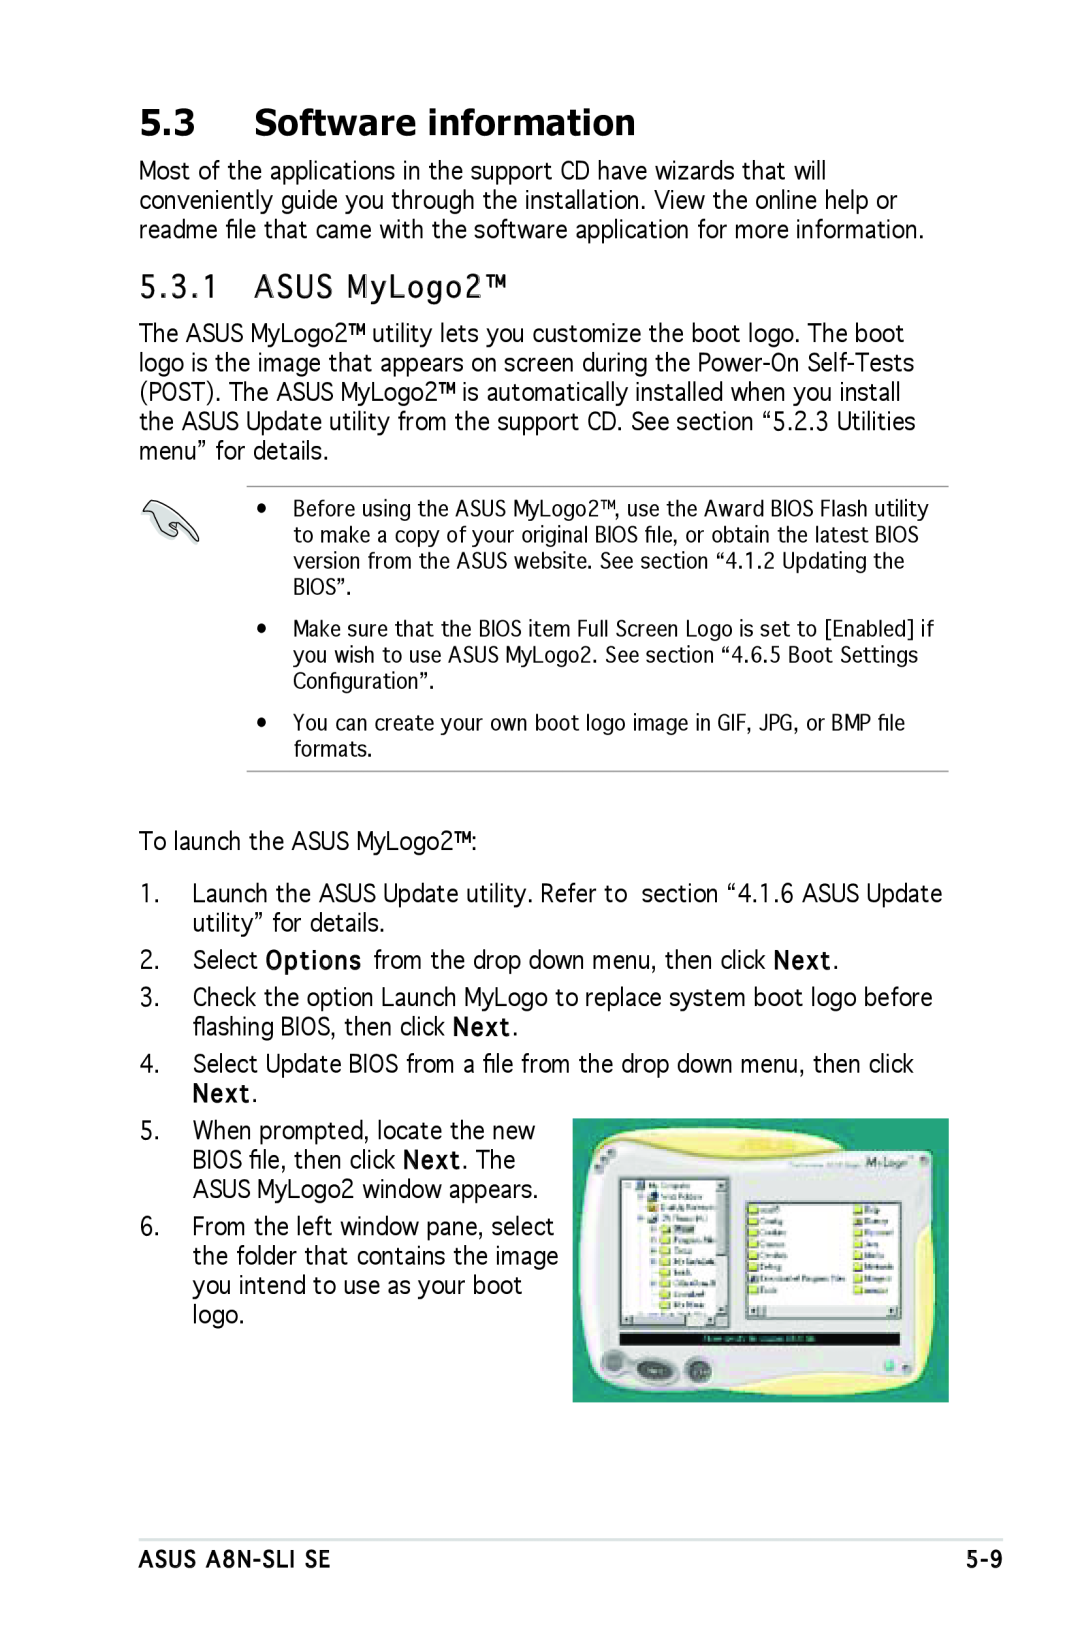 Asus A8N-SLI SE manual Software information, ASUS MyLogo2 